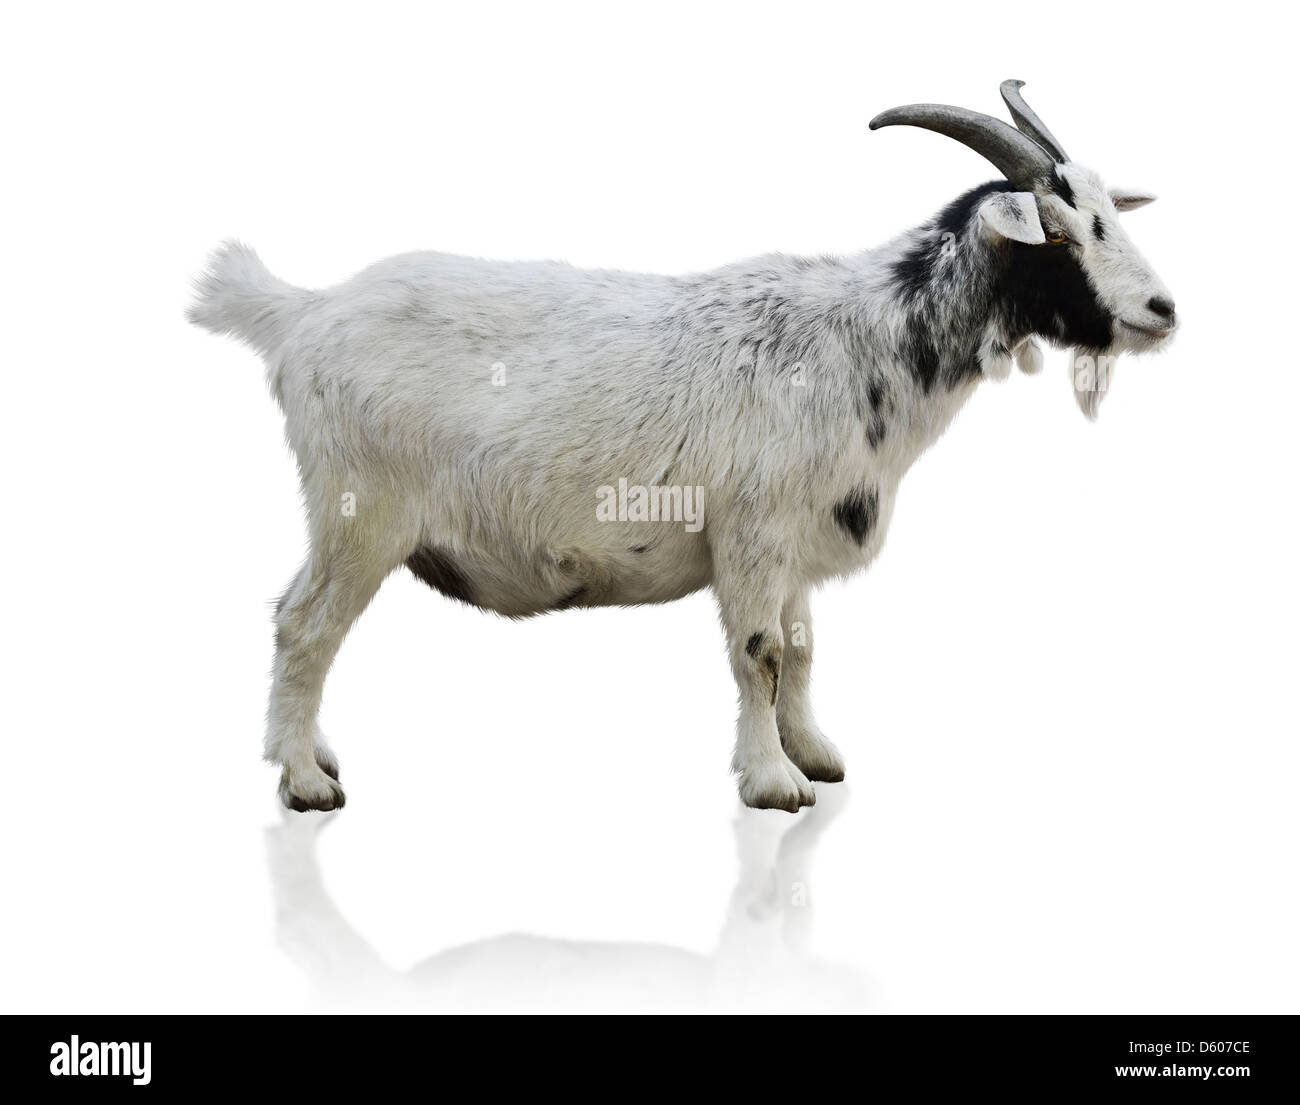 Black And White Goat On White Background Stock Photo